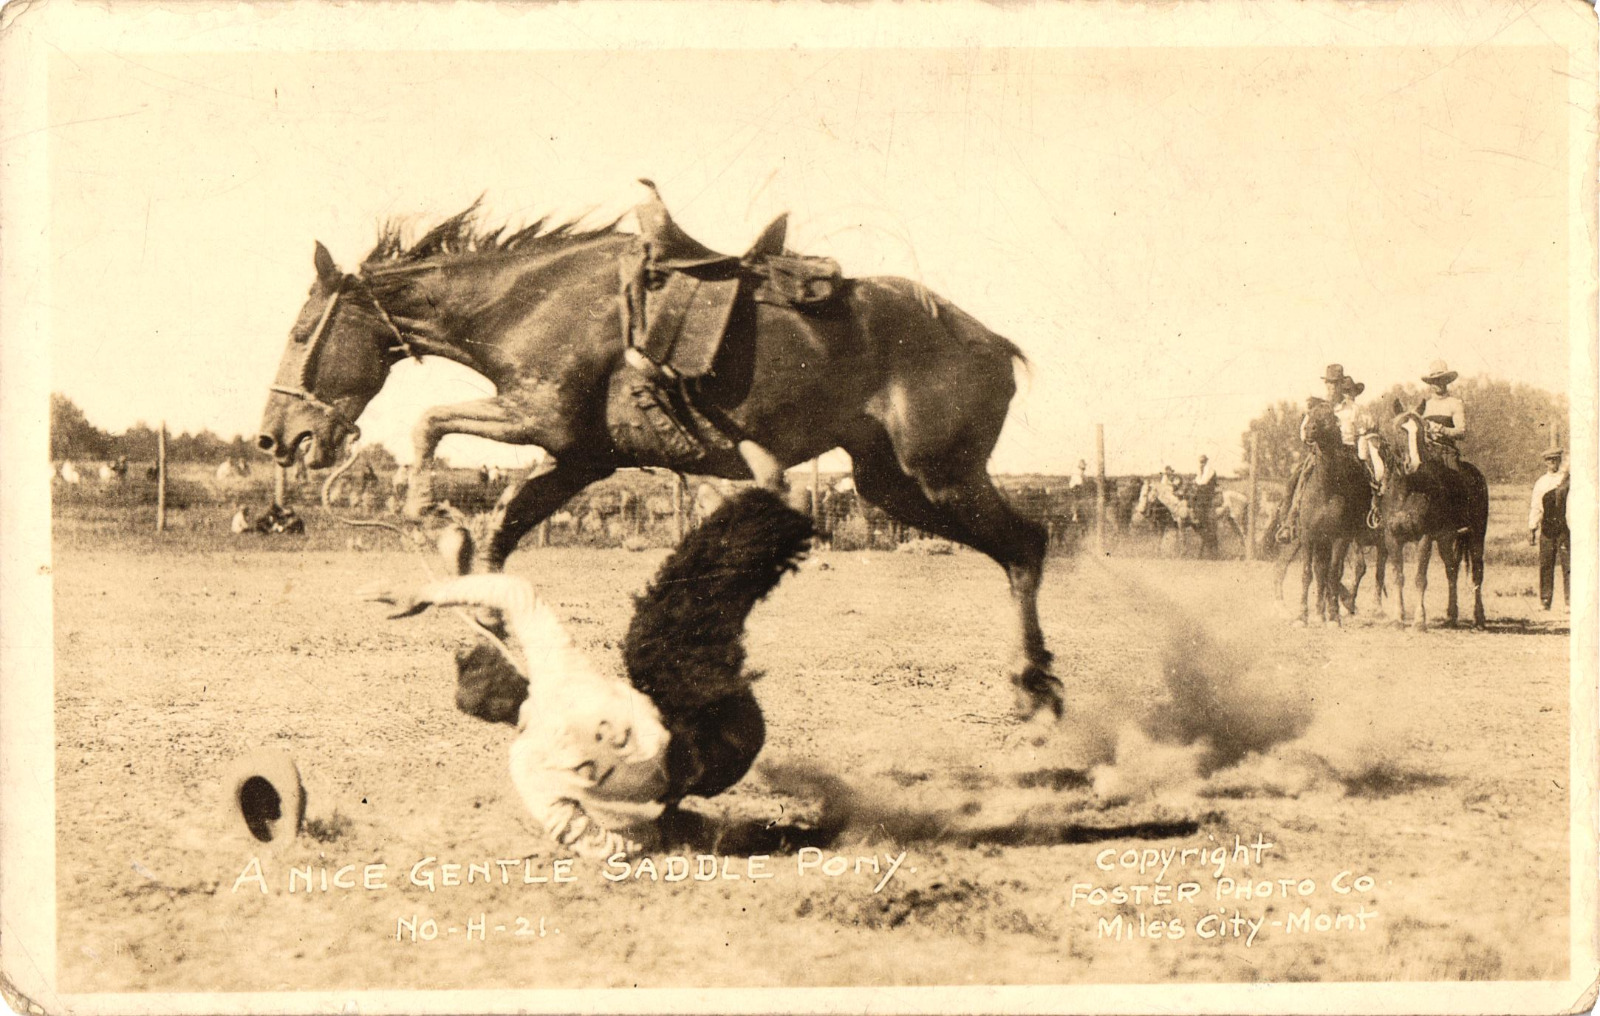 A Nice gentle Saddle Pony Miles City, Montana RPPC Unposted Postcard Rodeo